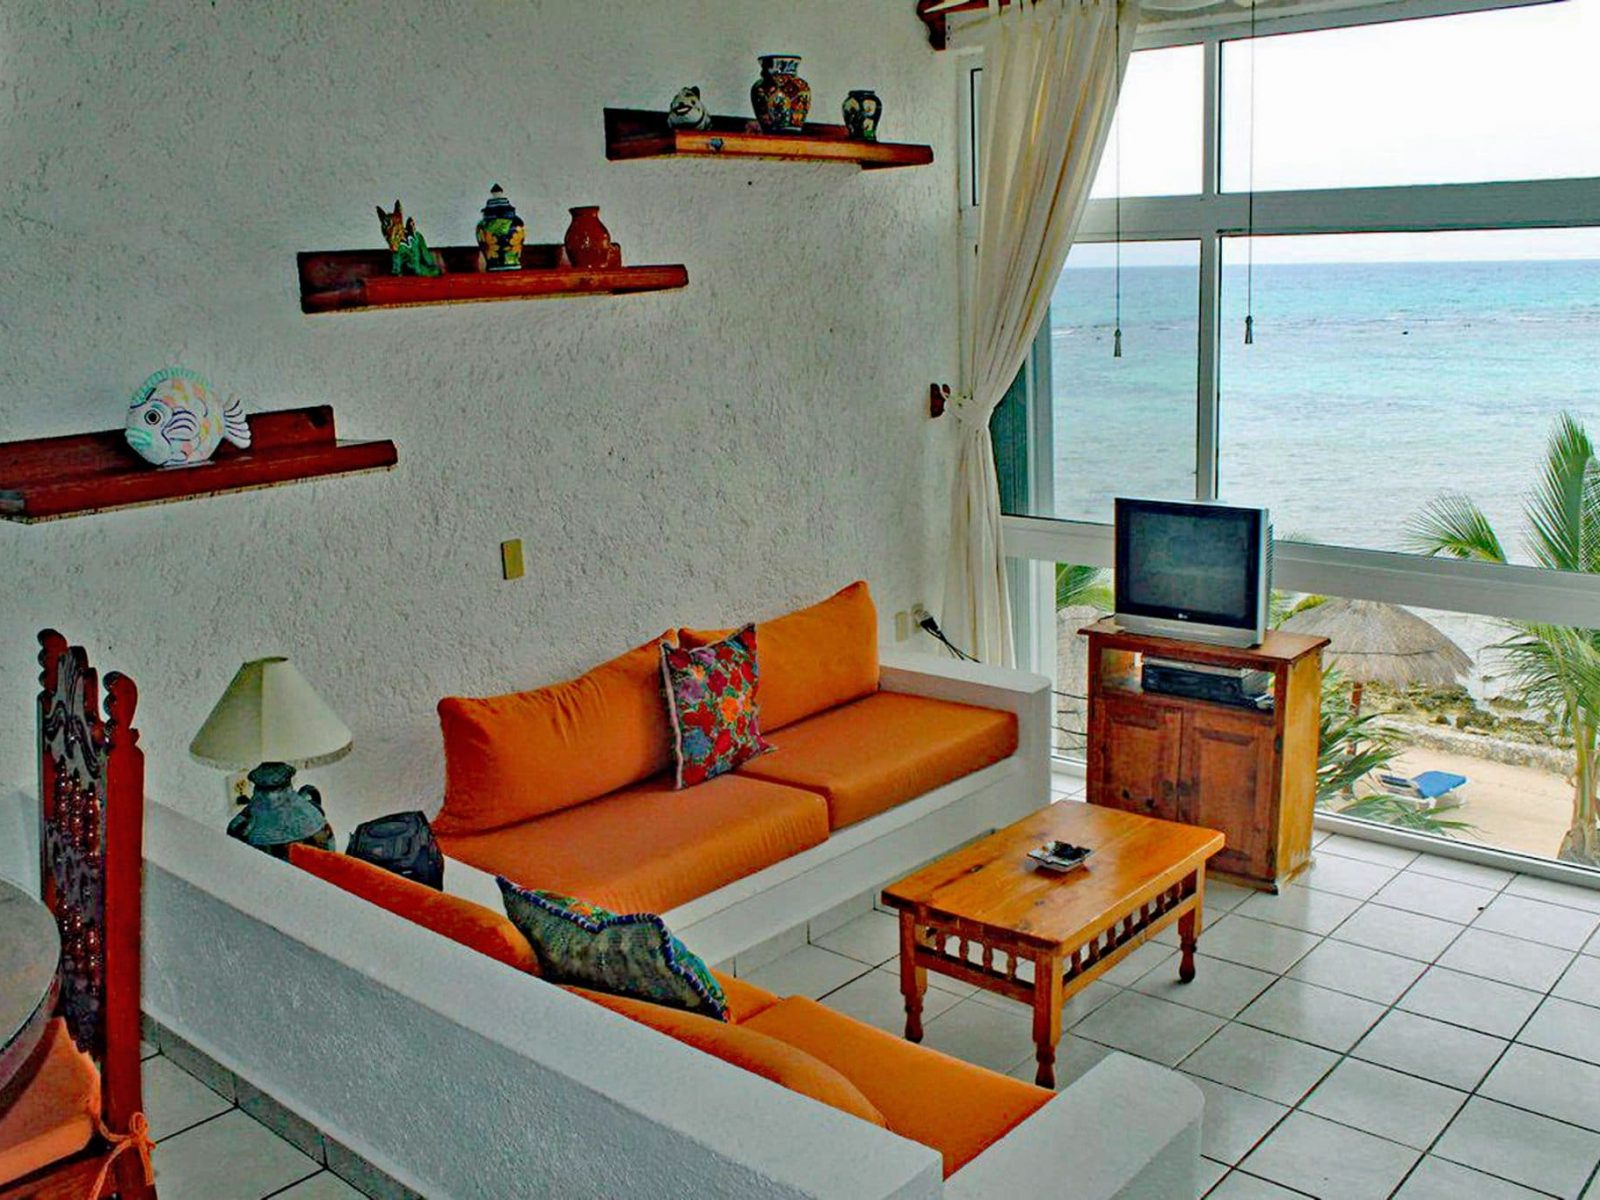 Tranquility, La Sirena #8, the open floor plan, high ceilings and window walls enable fantastic ocean breeze